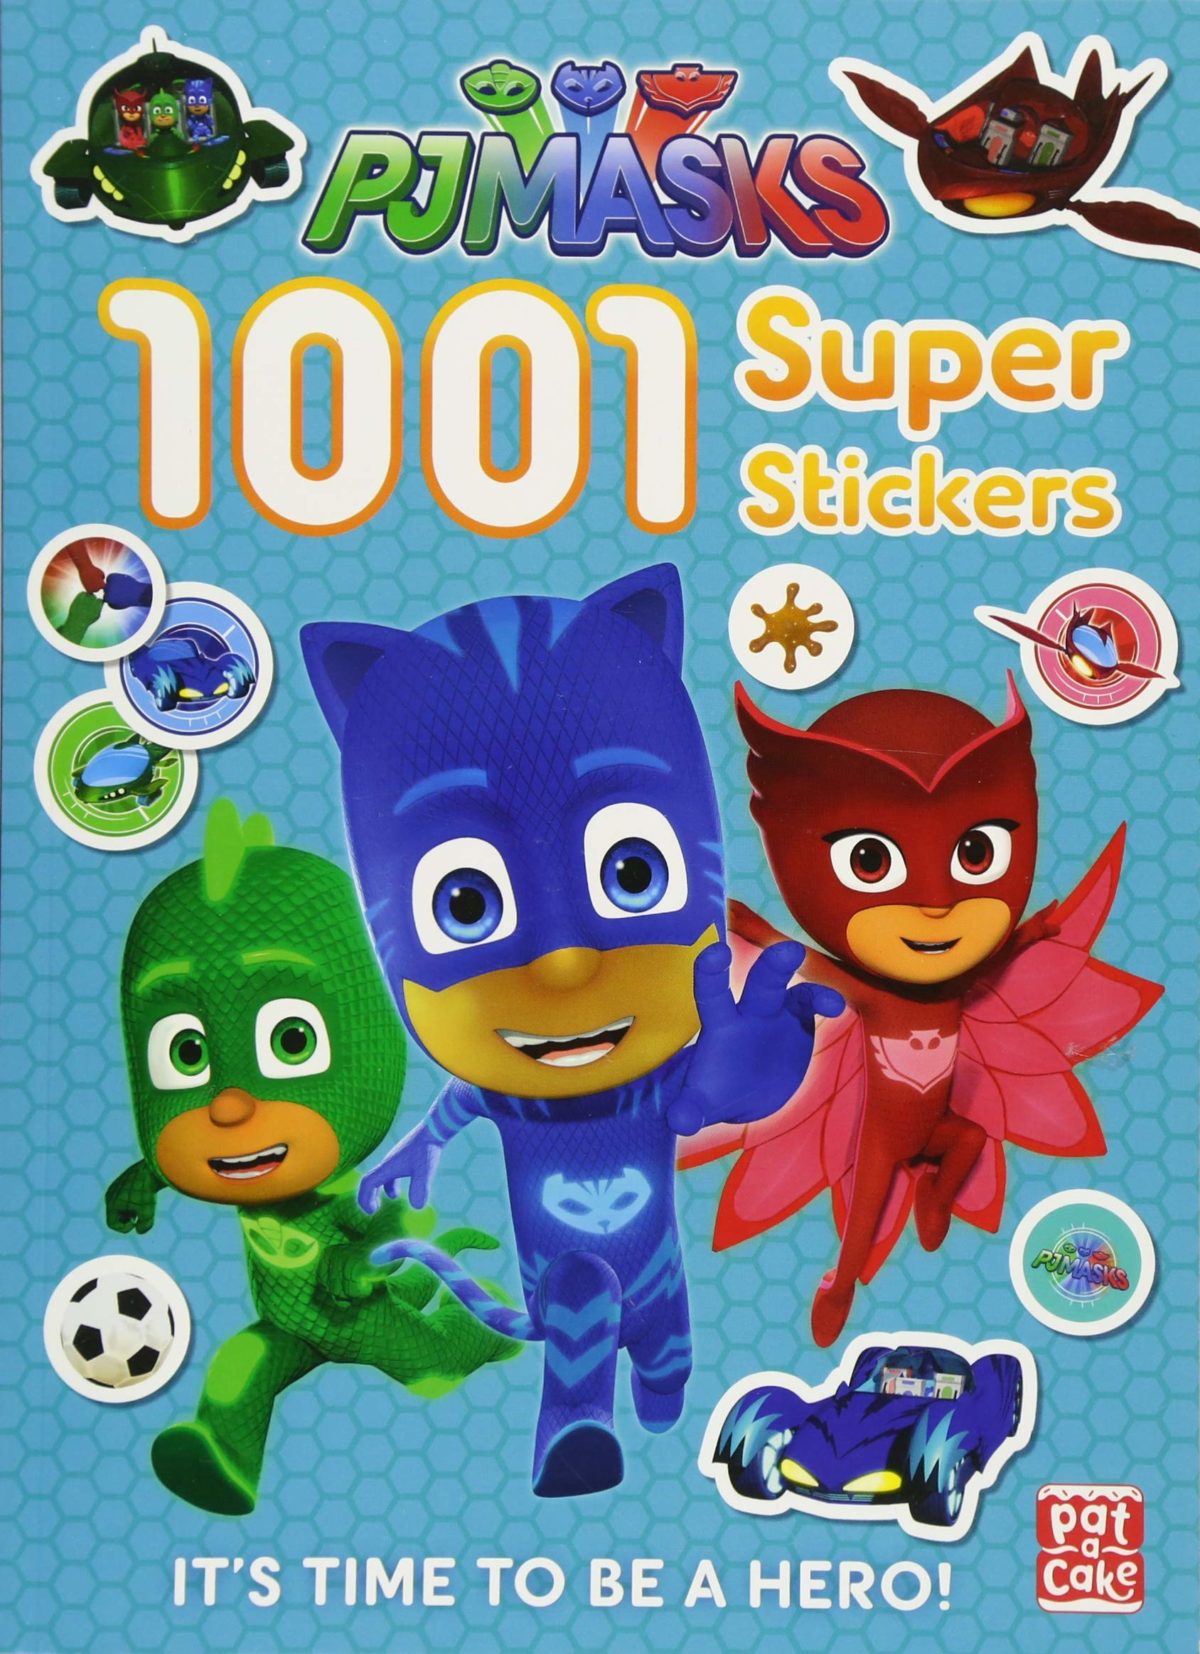 1001 Super Stickers (PJ Masks) (Inglés) Tapa blanda